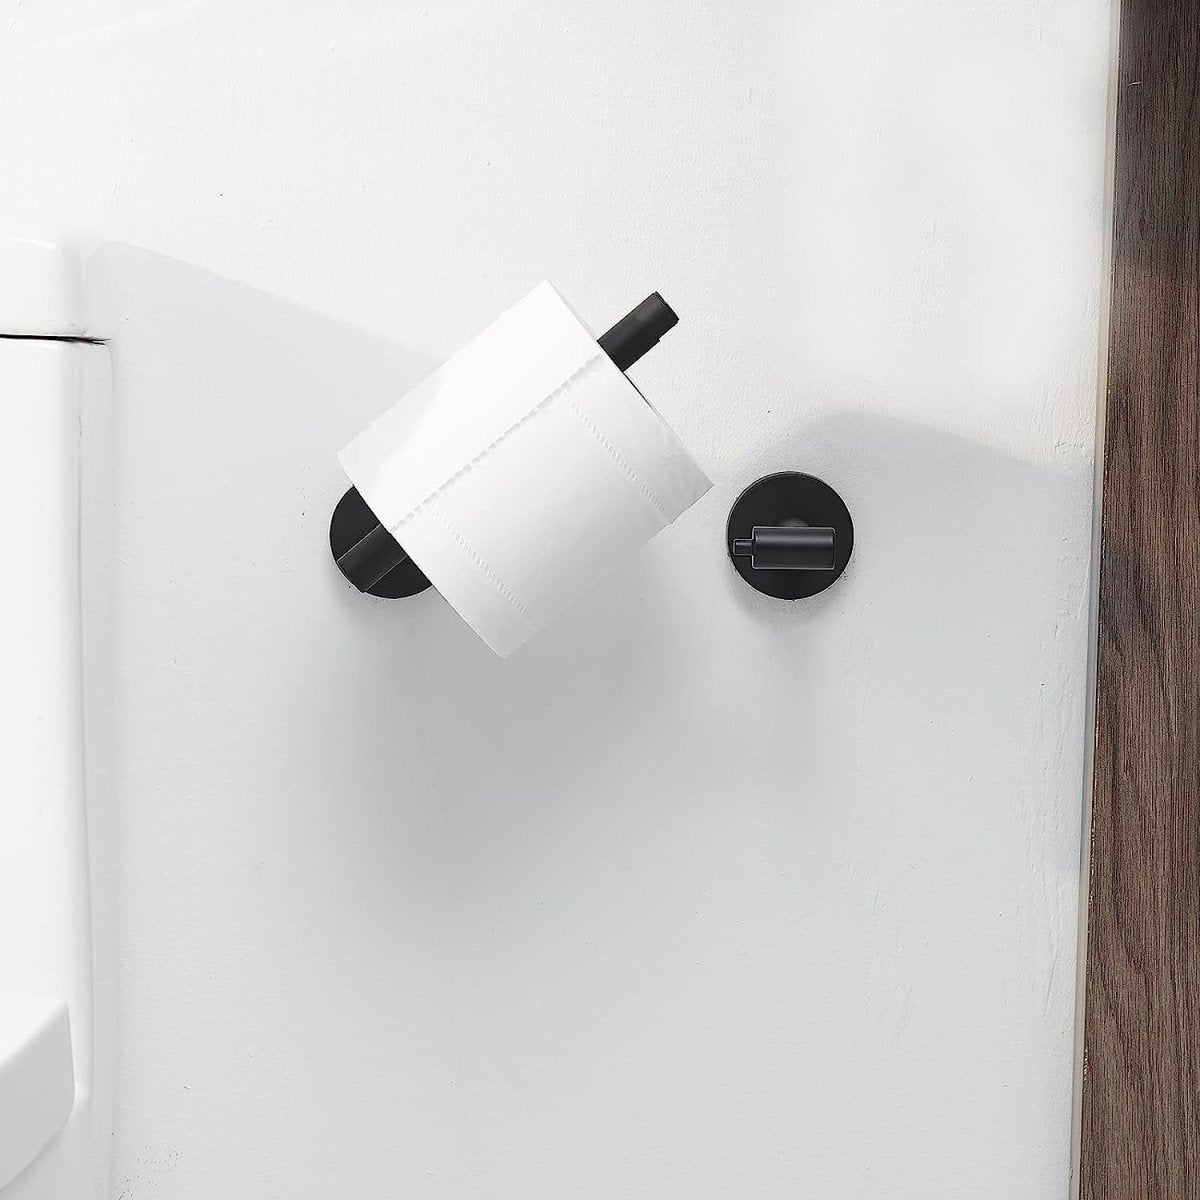 Double Post Pivoting Toilet Paper Holder in Matte Black - buyfaucet.com